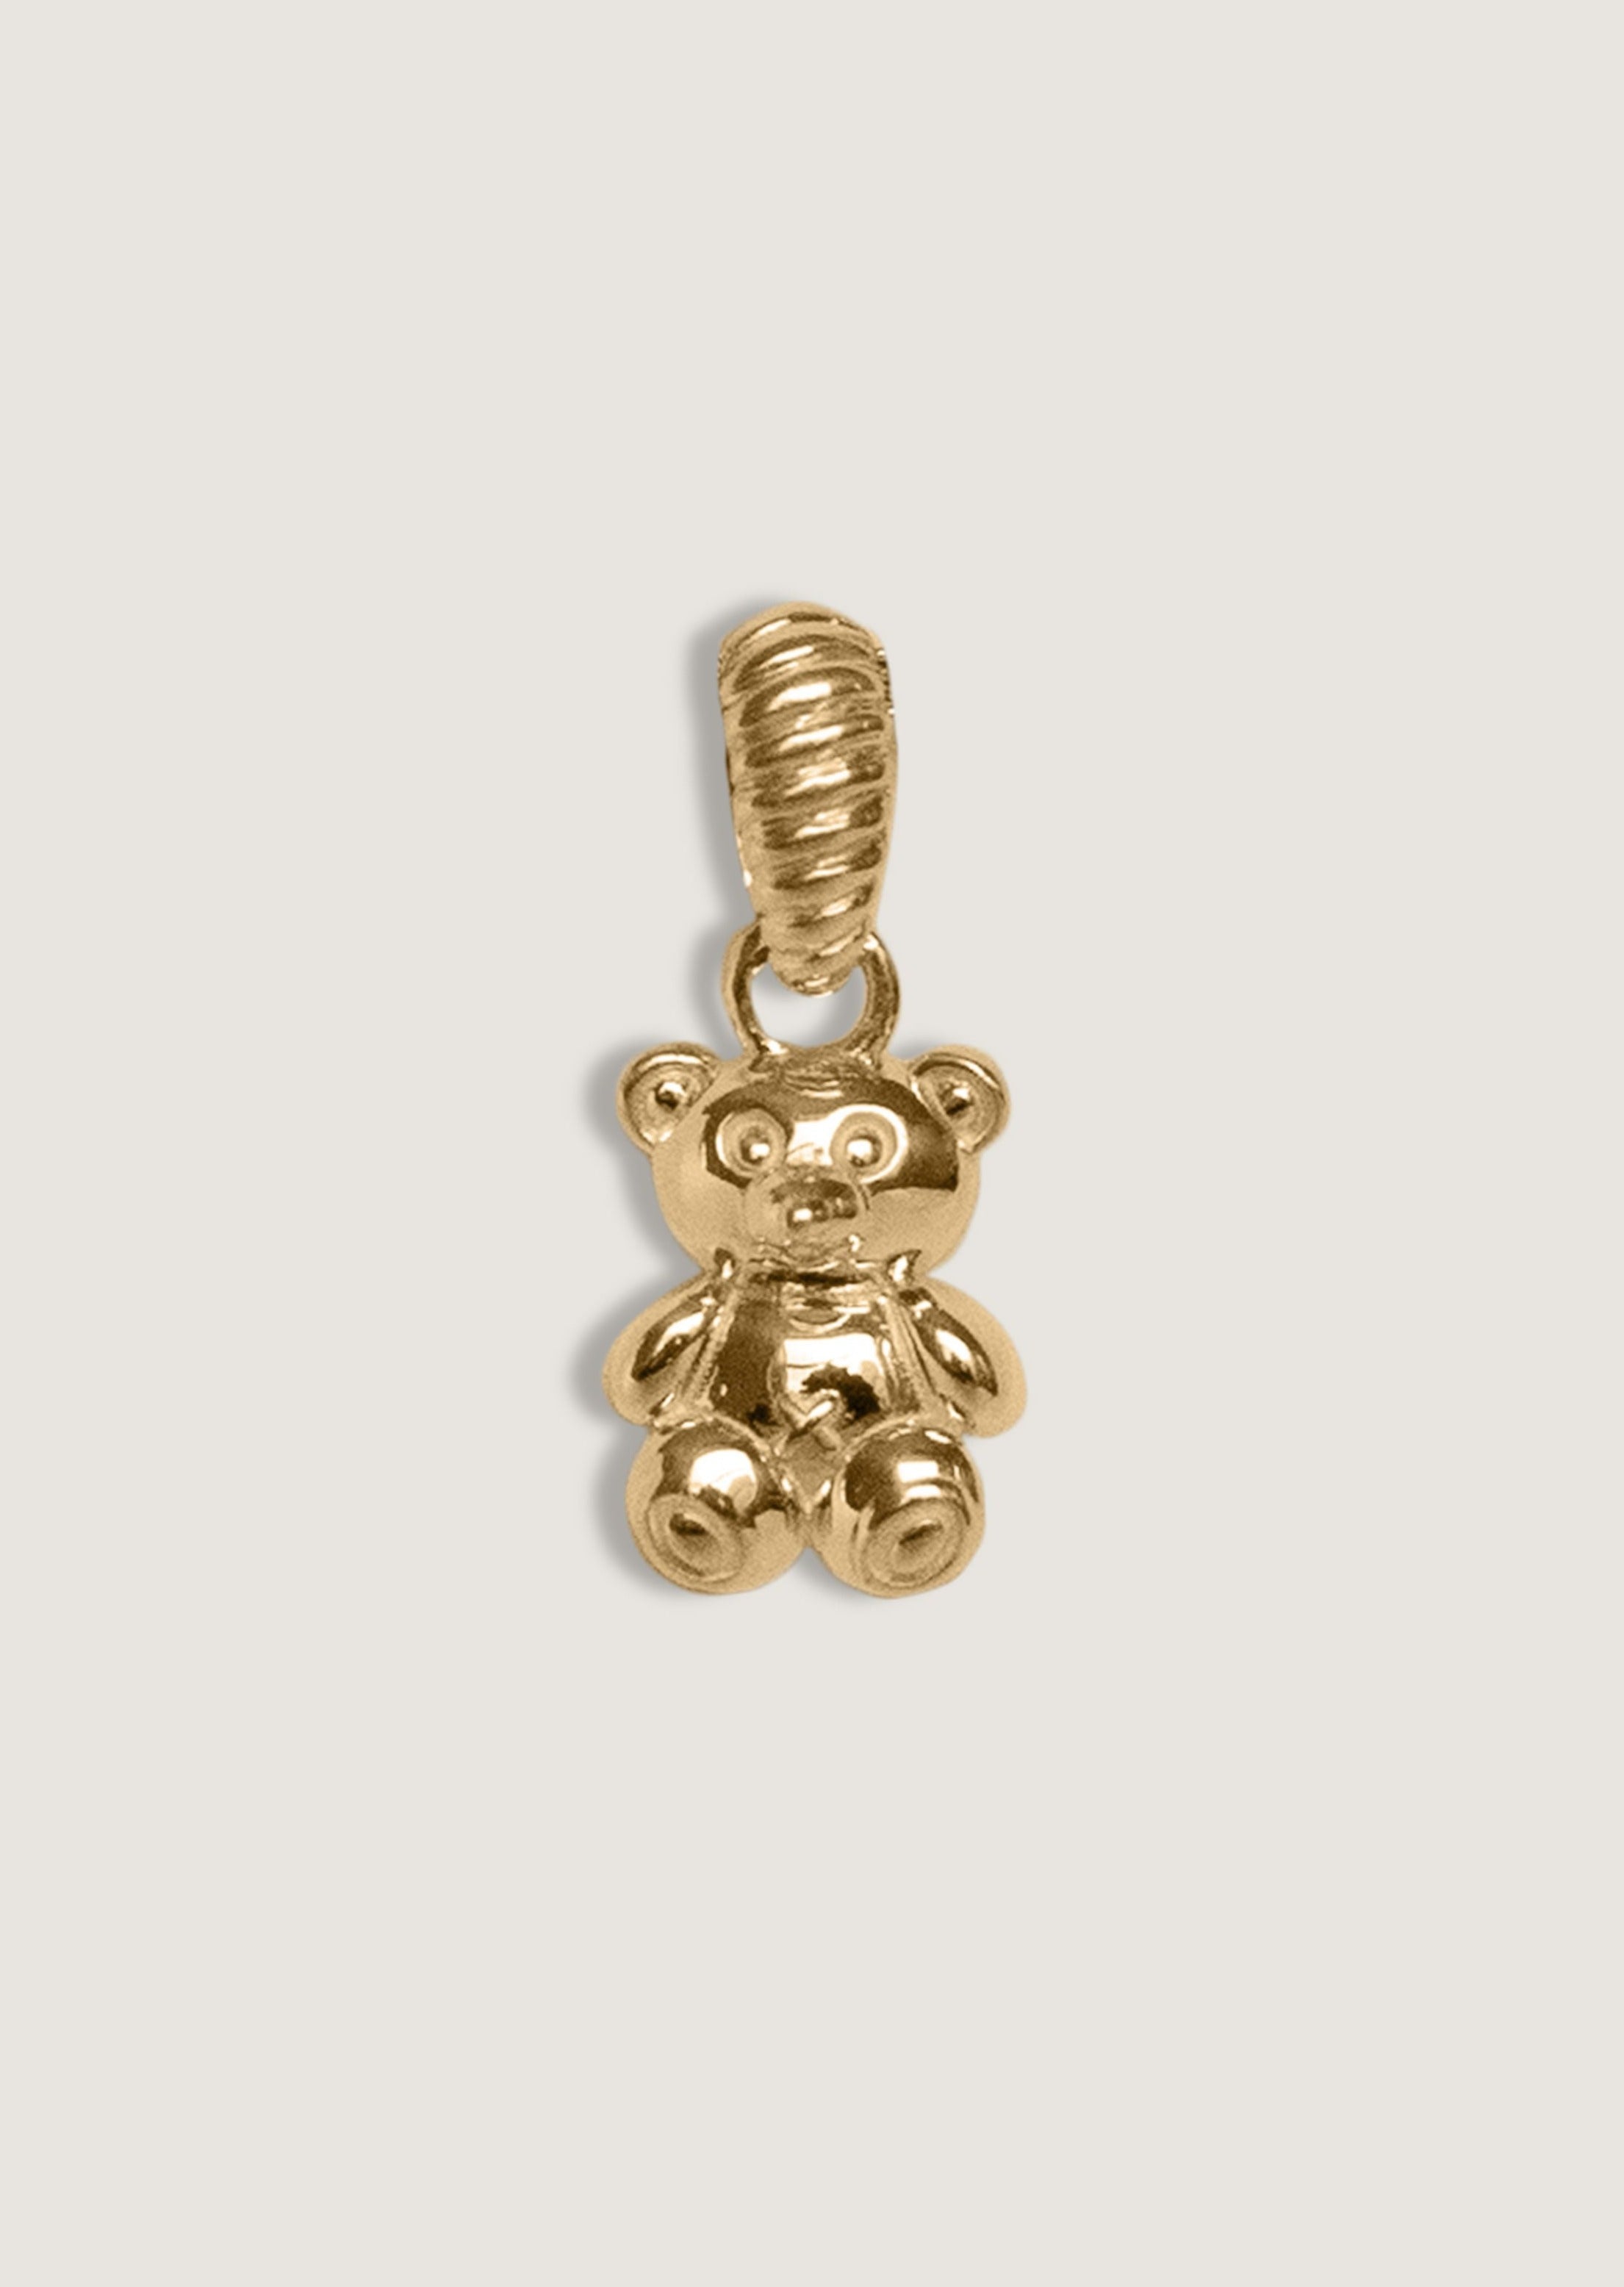 Oliver Teddy Bear Pendant Gold